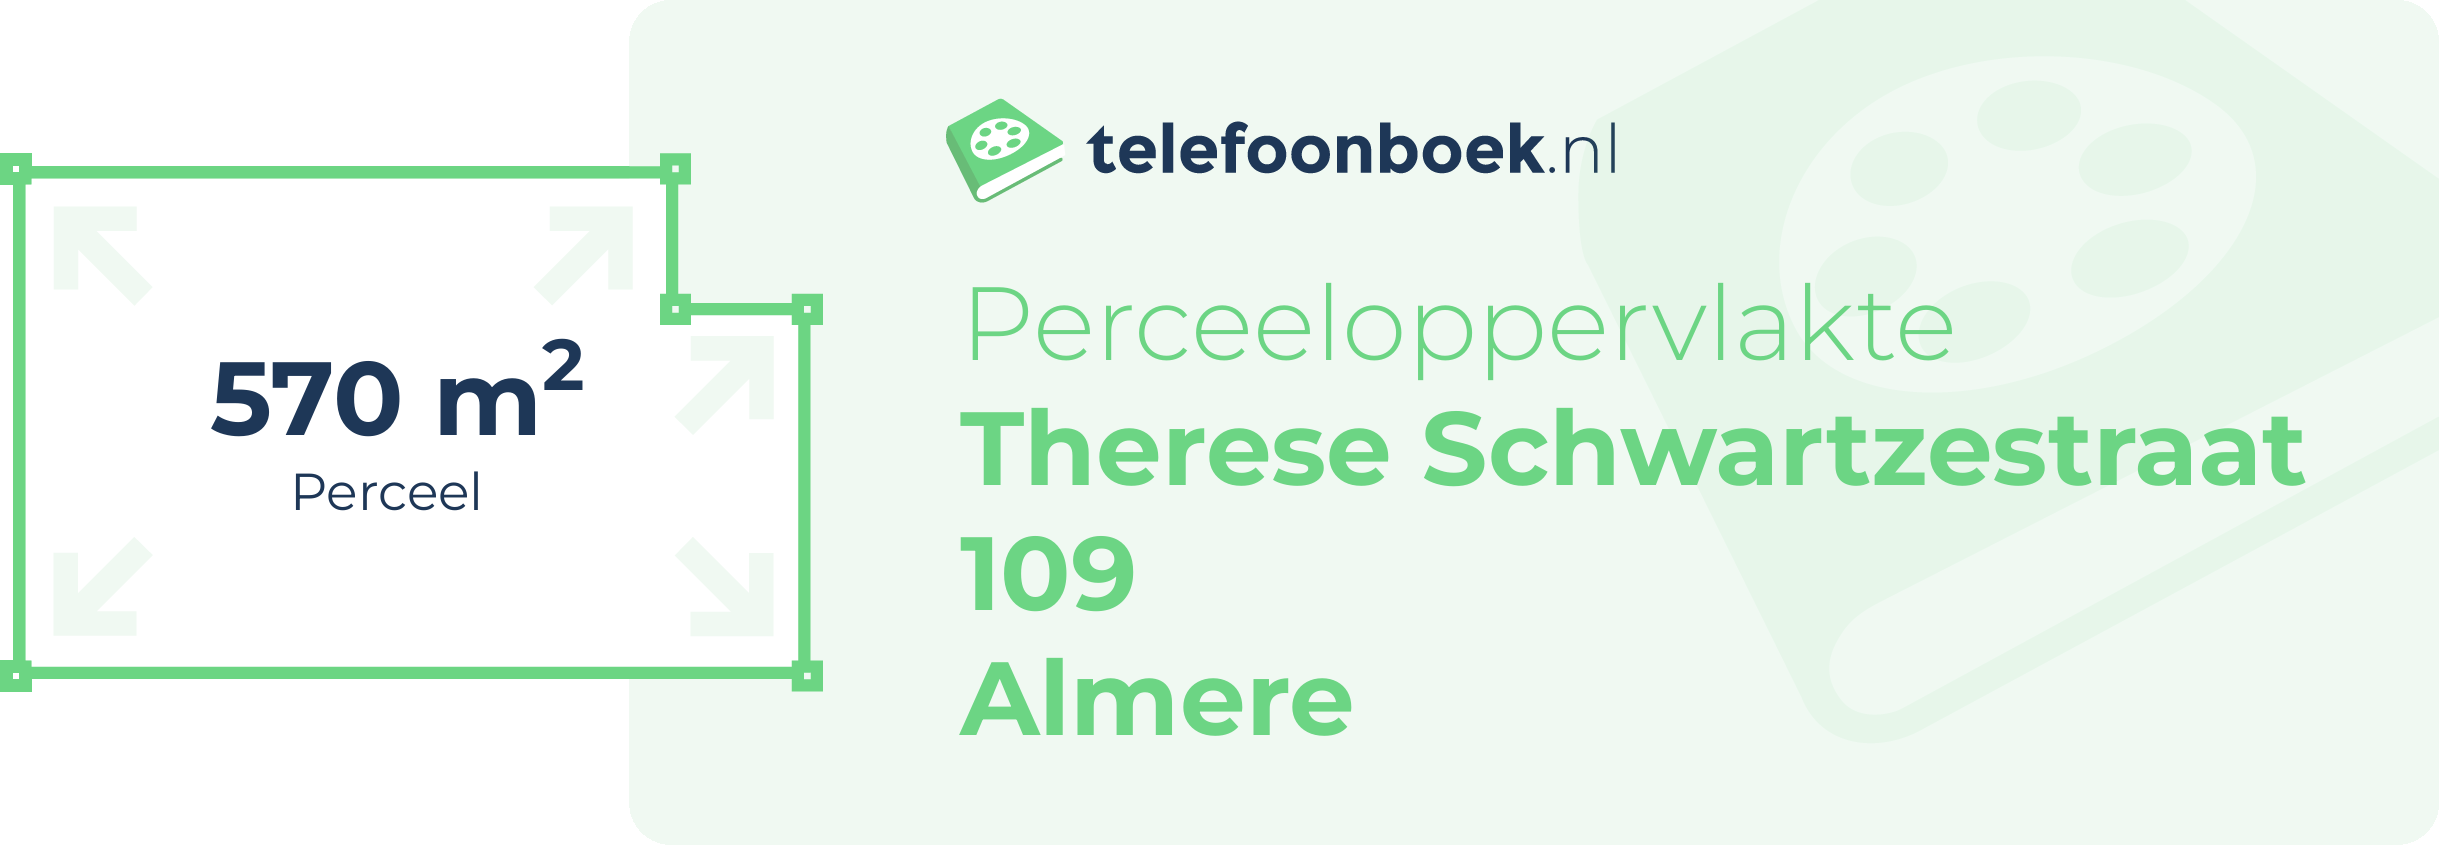 Perceeloppervlakte Therese Schwartzestraat 109 Almere